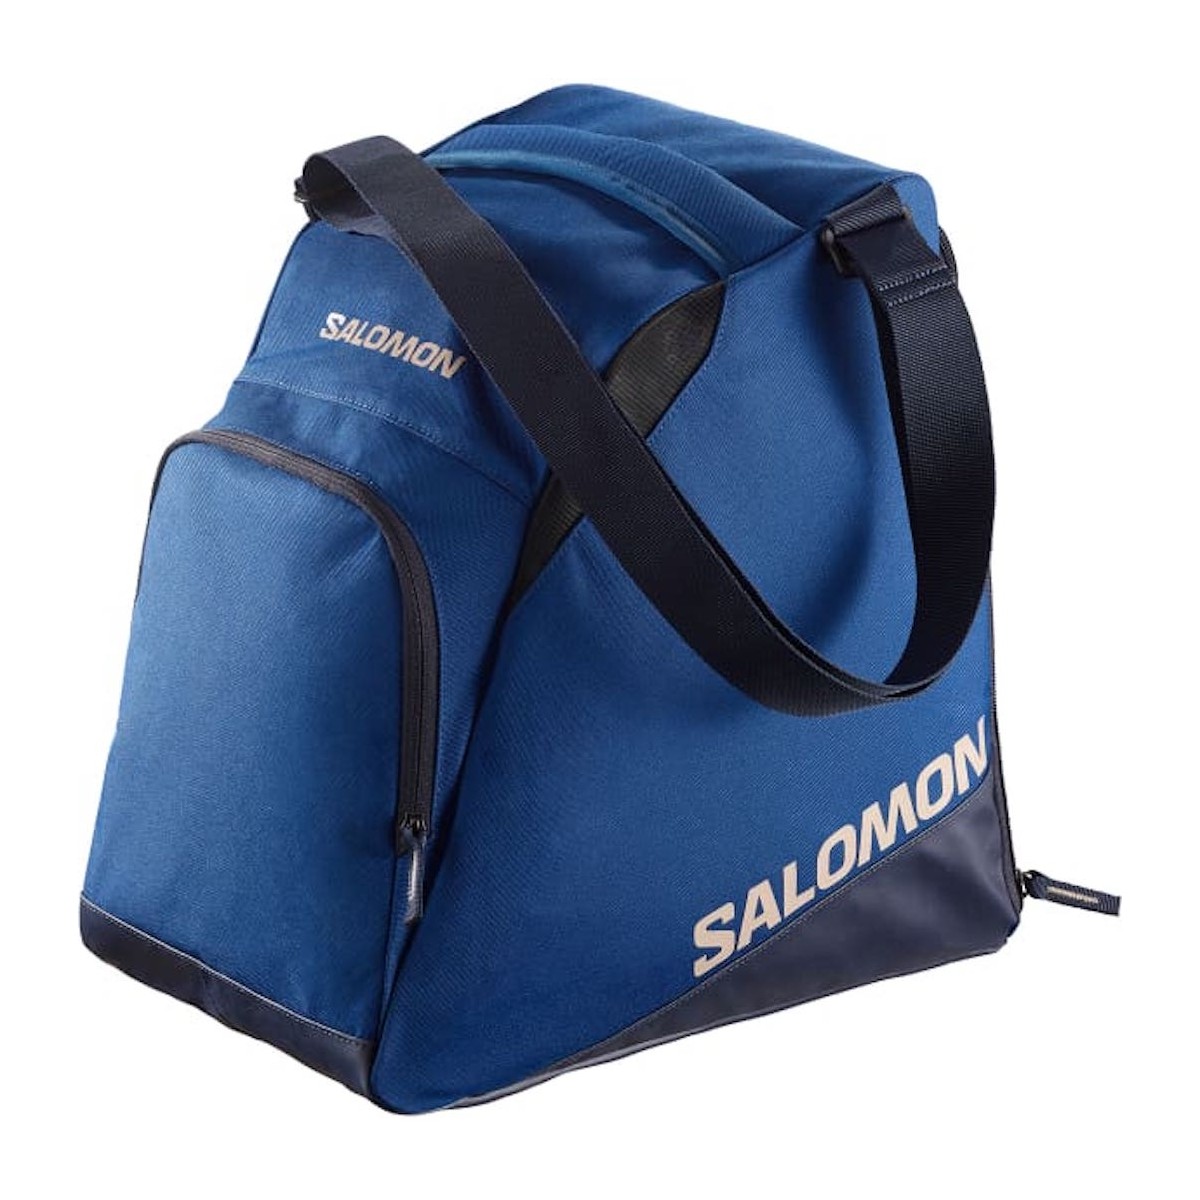 SALOMON ORIGINAL GEARBAG boot bag - dark blue